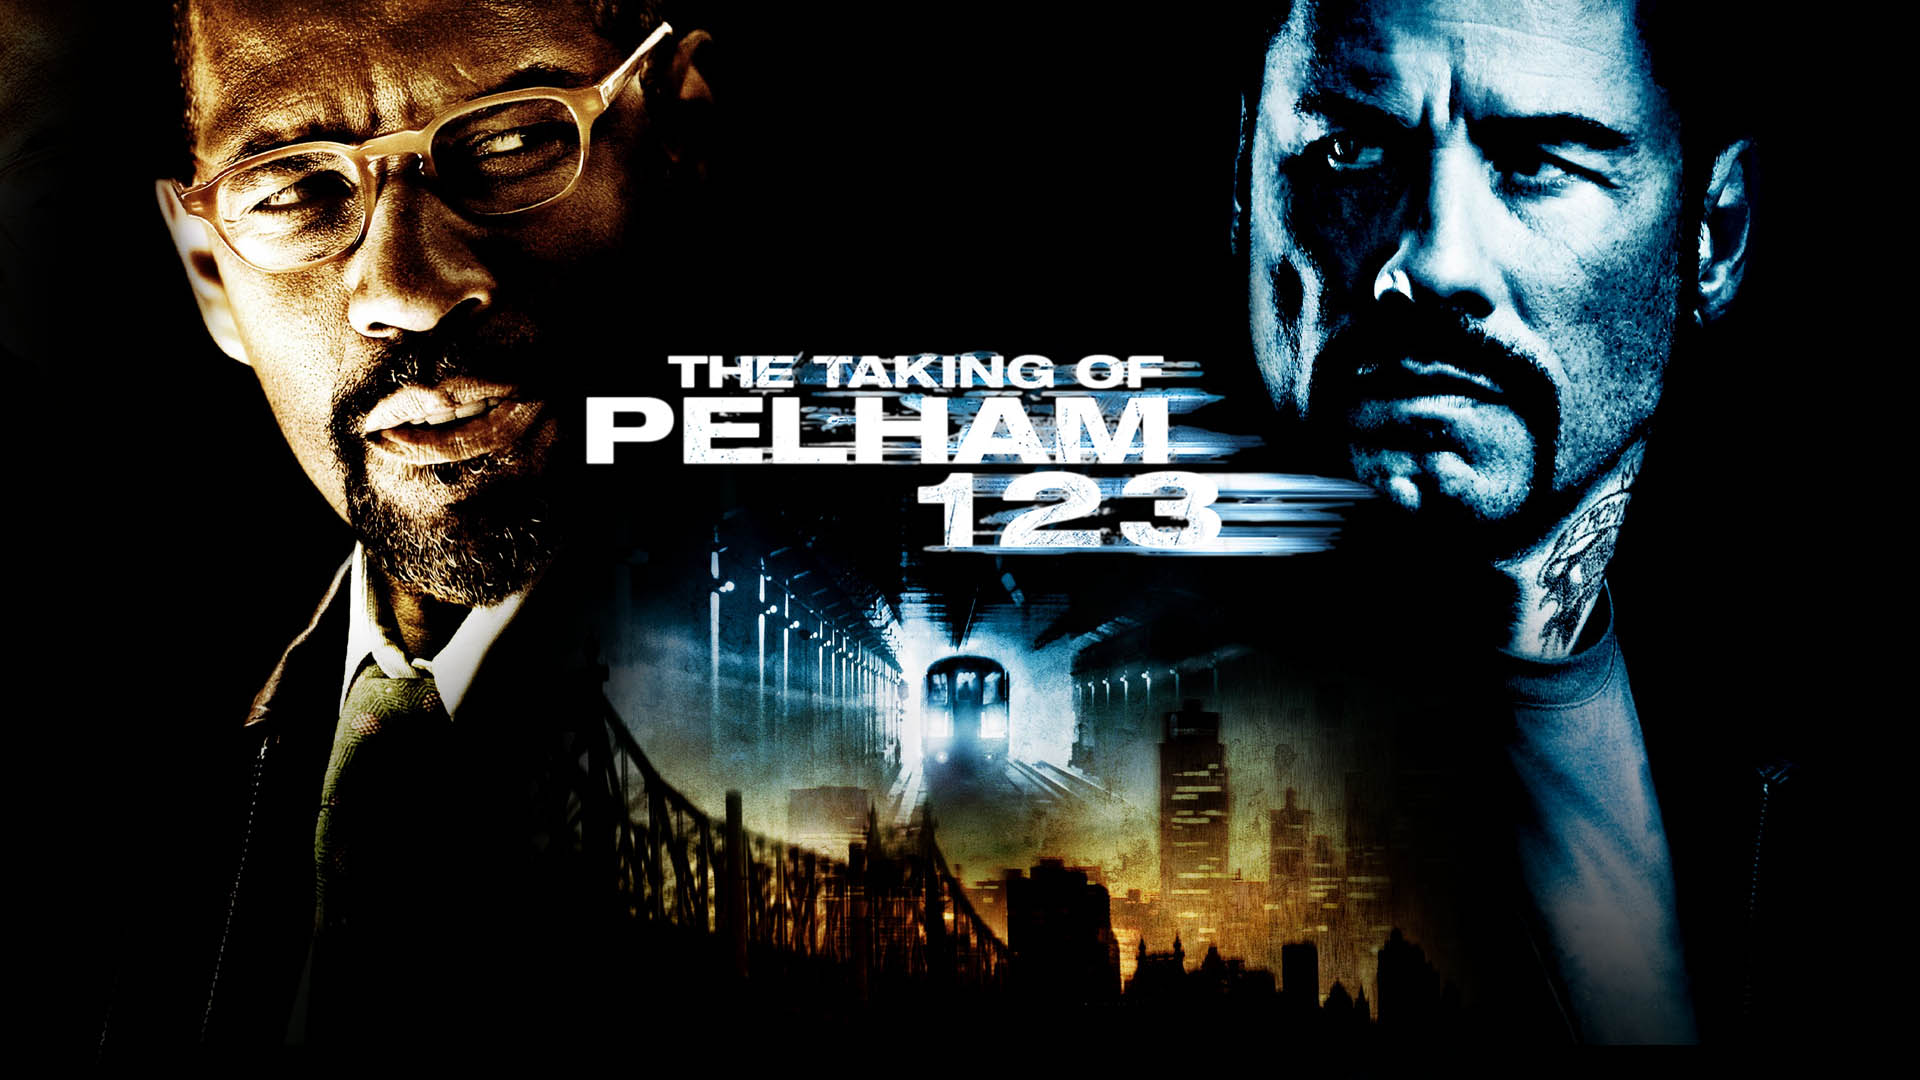 Watch The Taking of Pelham 1 2 3 (2009) Online | Stream Full Movies